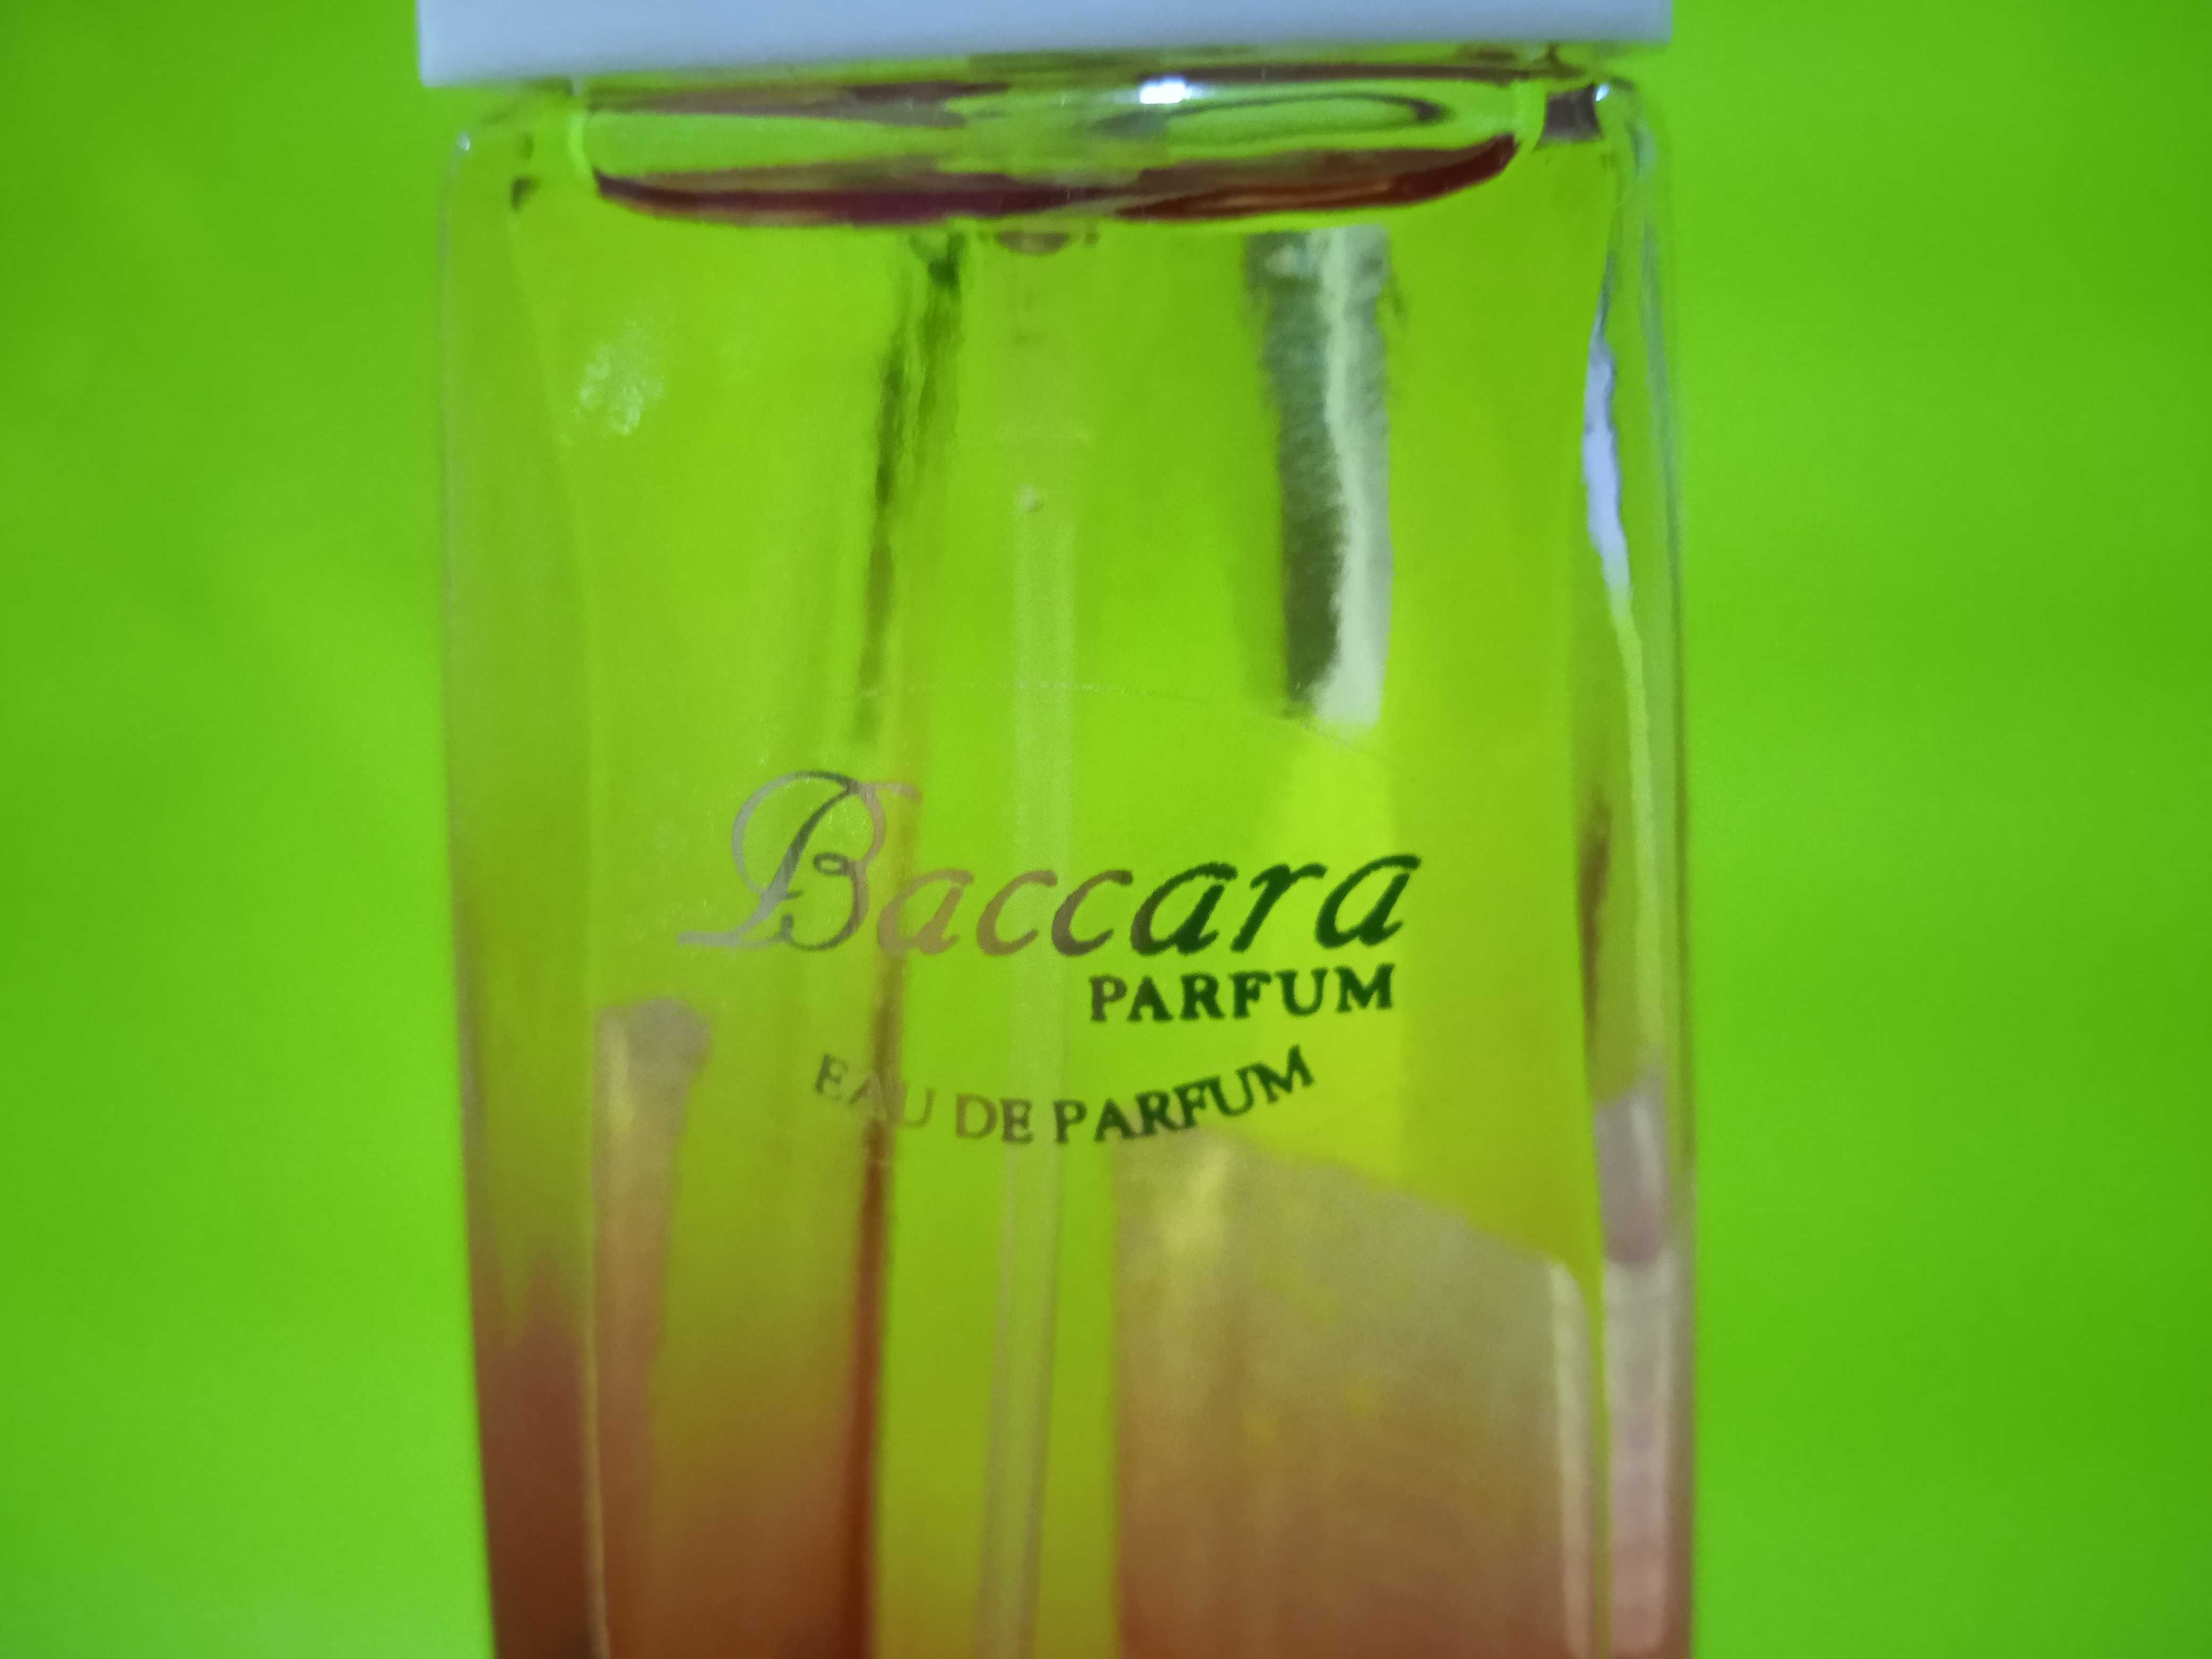 Baccara parfum 65 ml новая